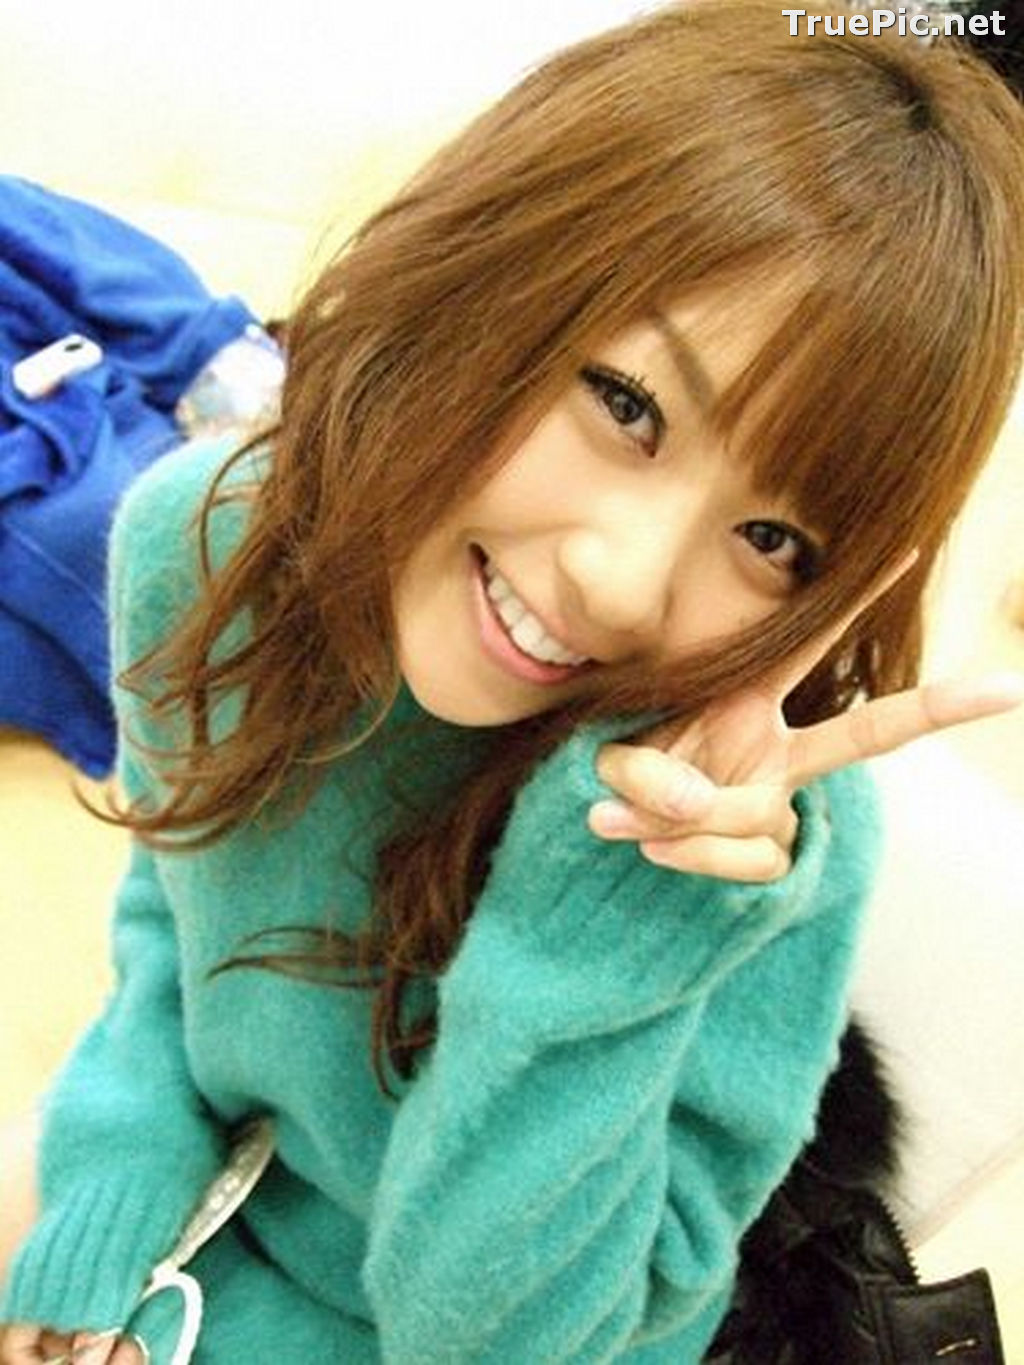 Image [YS Web] Vol.356 - Japanese Gravure Idol and Actress - Mai Nishida - TruePic.net - Picture-24